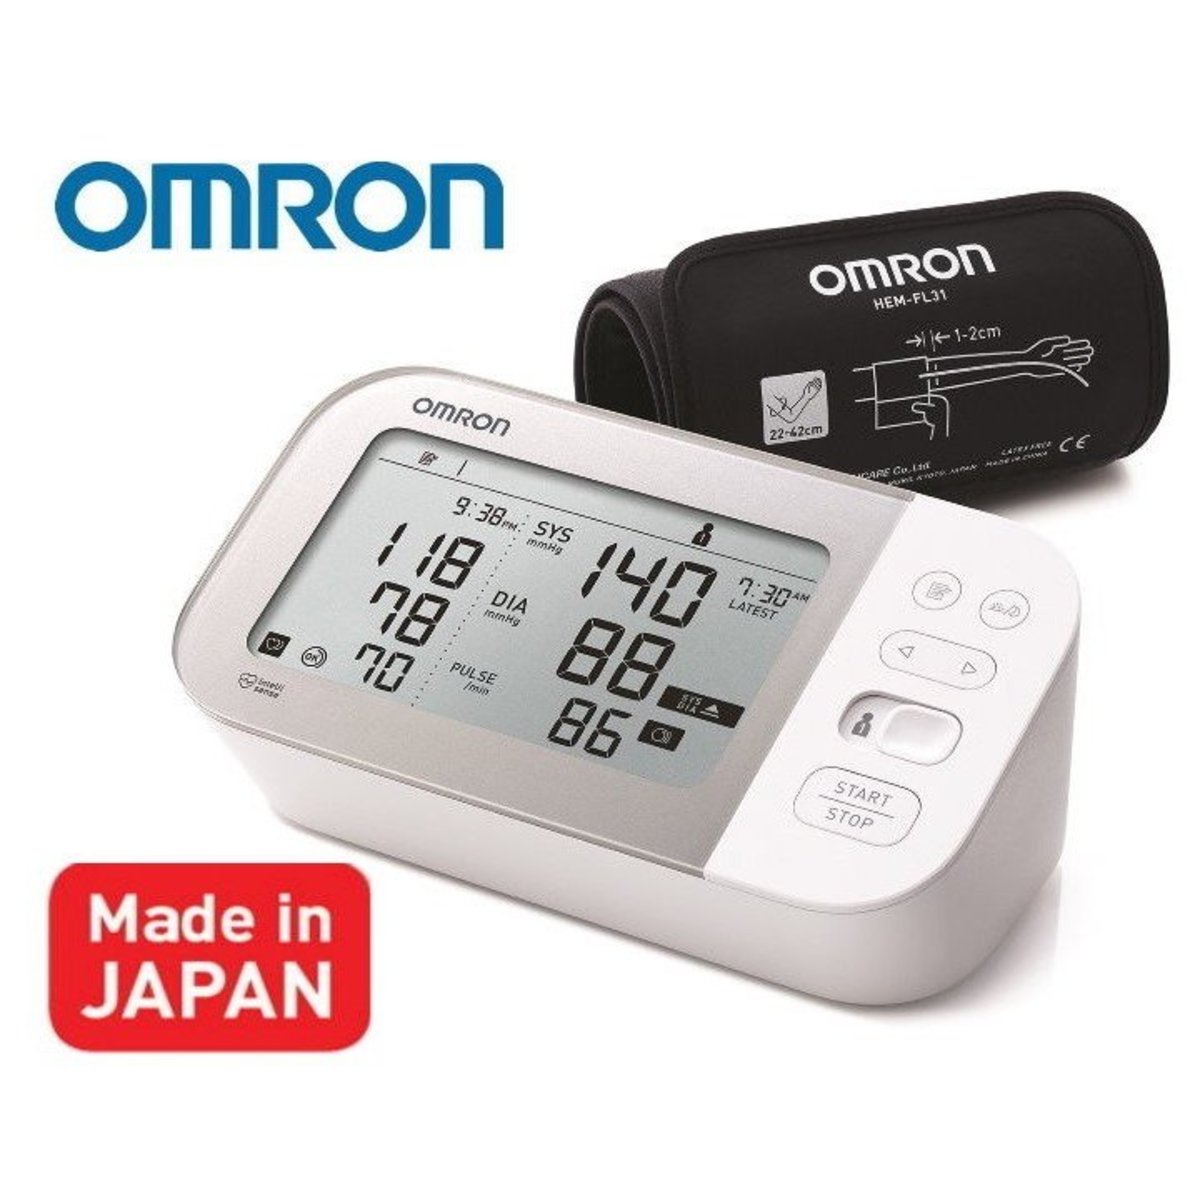 OMRON - JPN710T Bluetooth Arm Blood Pressure Monitor 